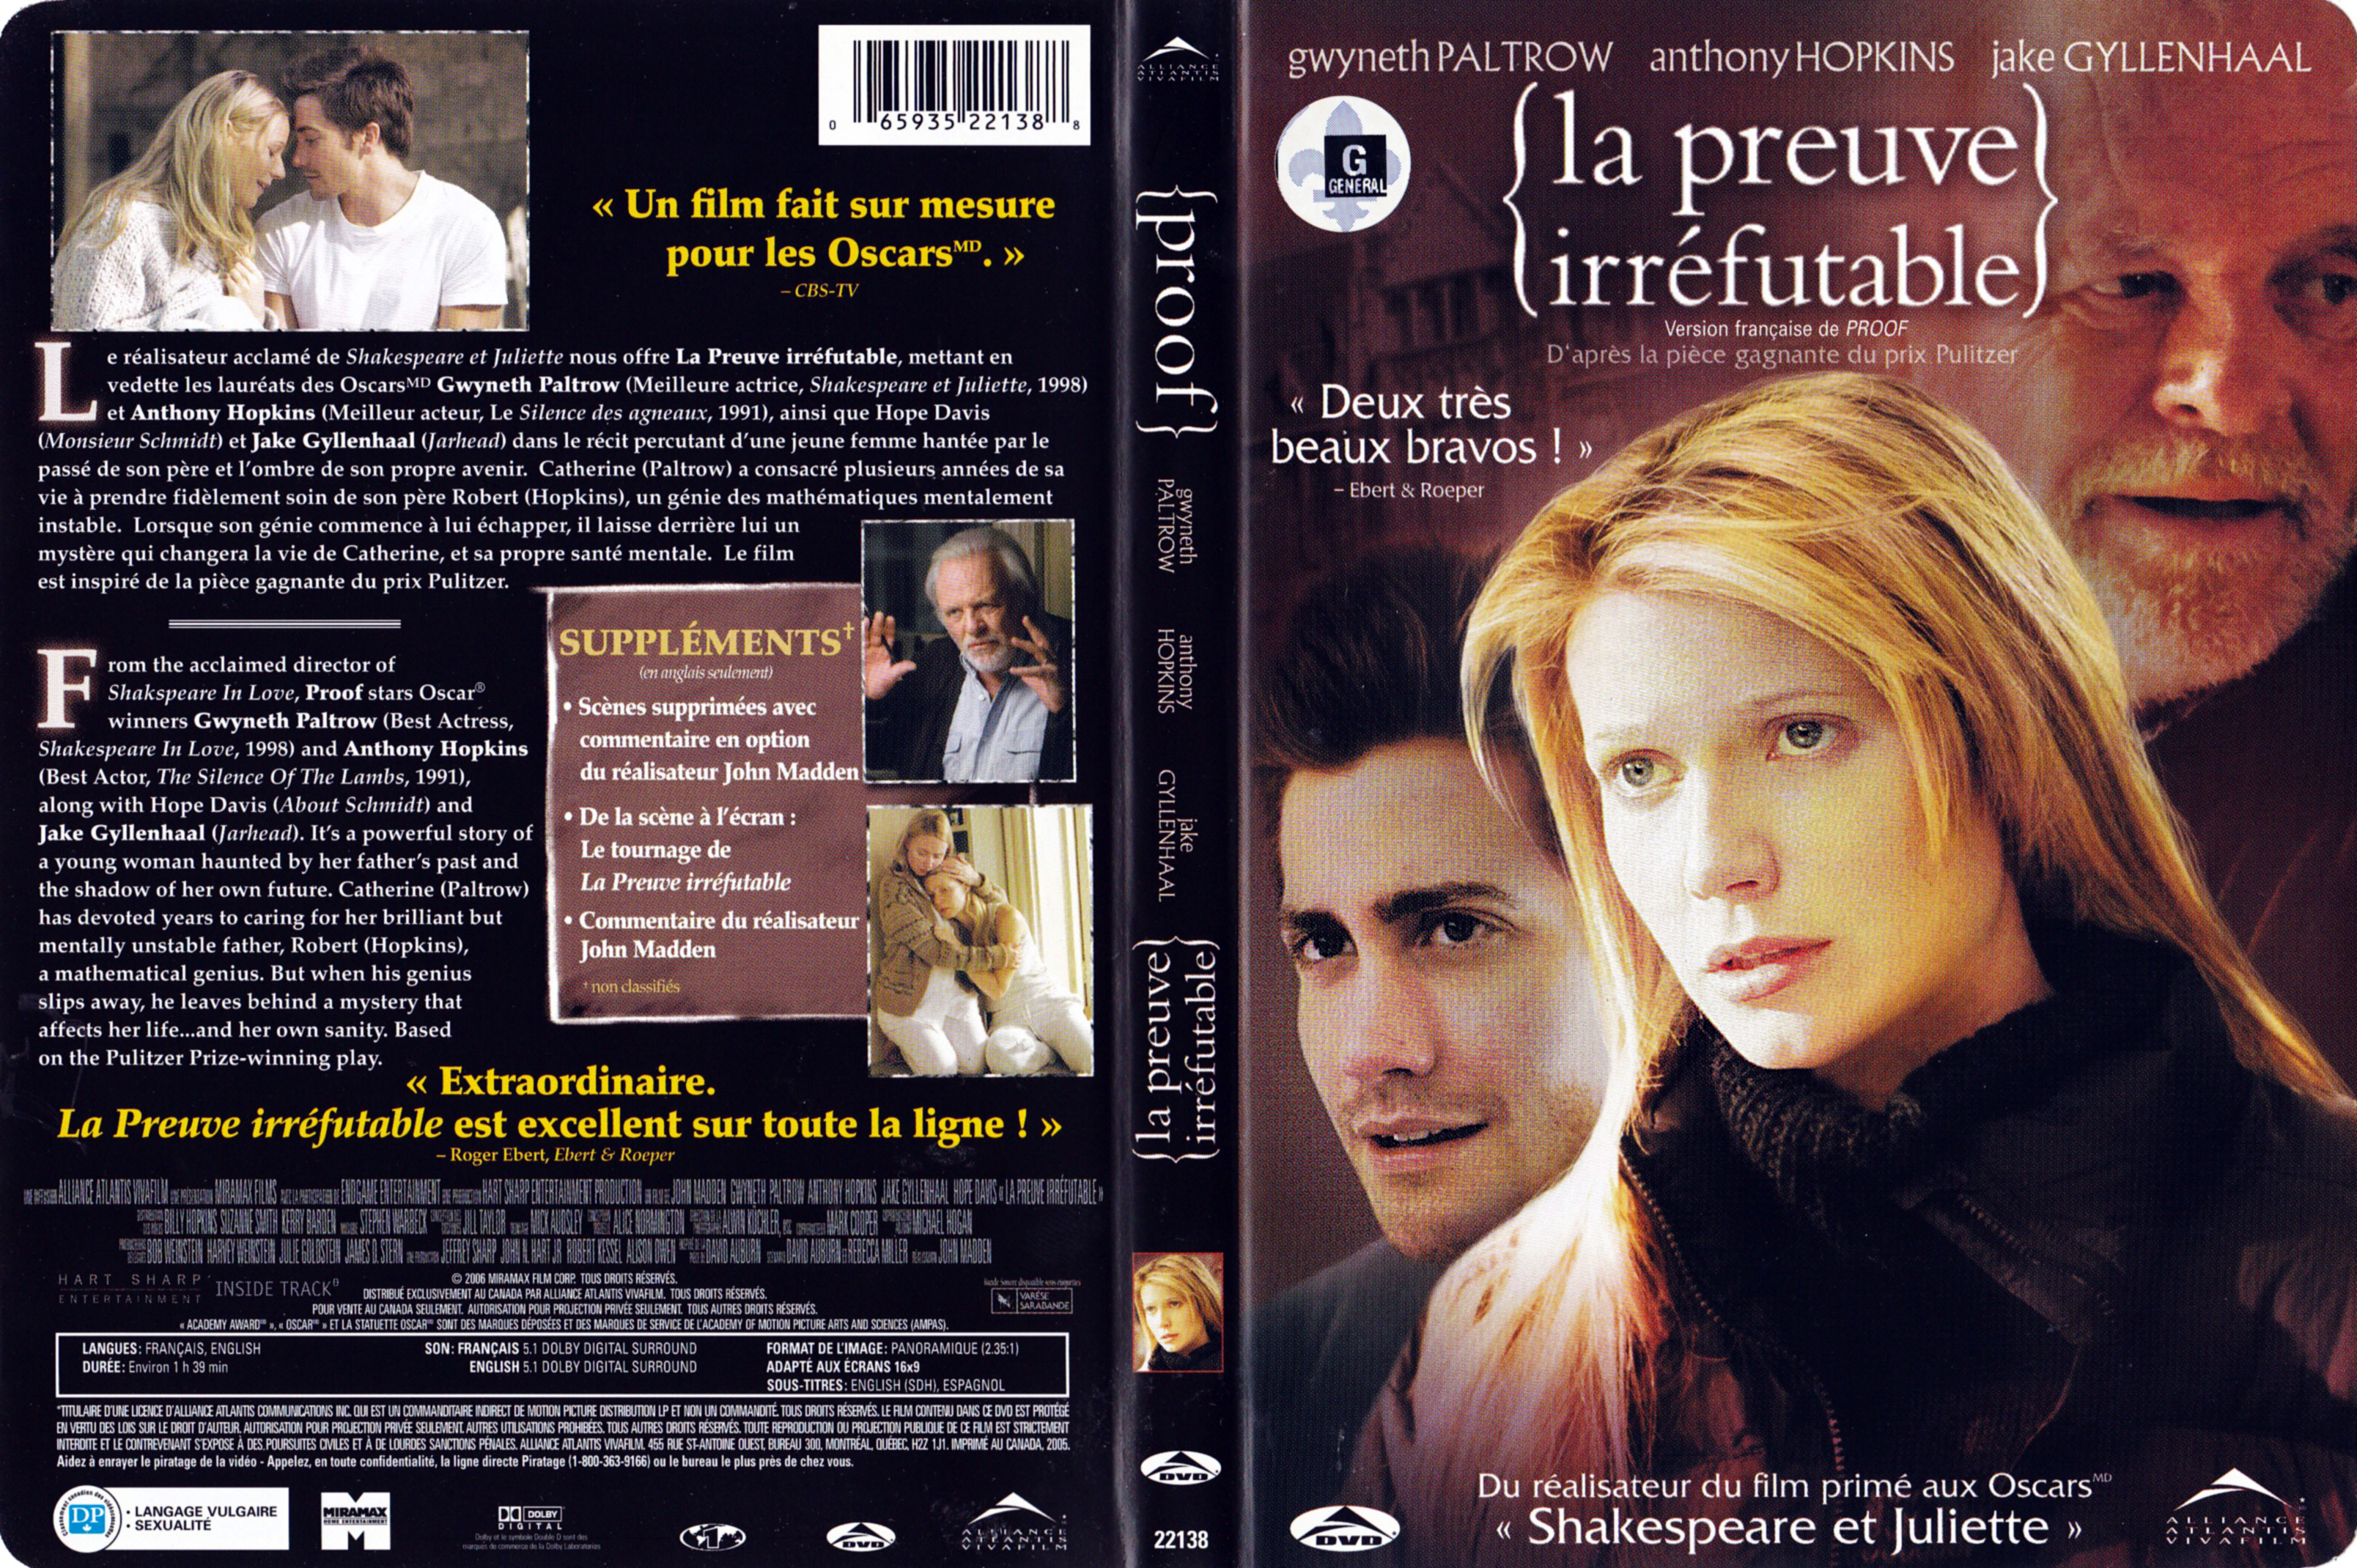 Jaquette DVD La preuve irrfutable - Proof (Canadienne)